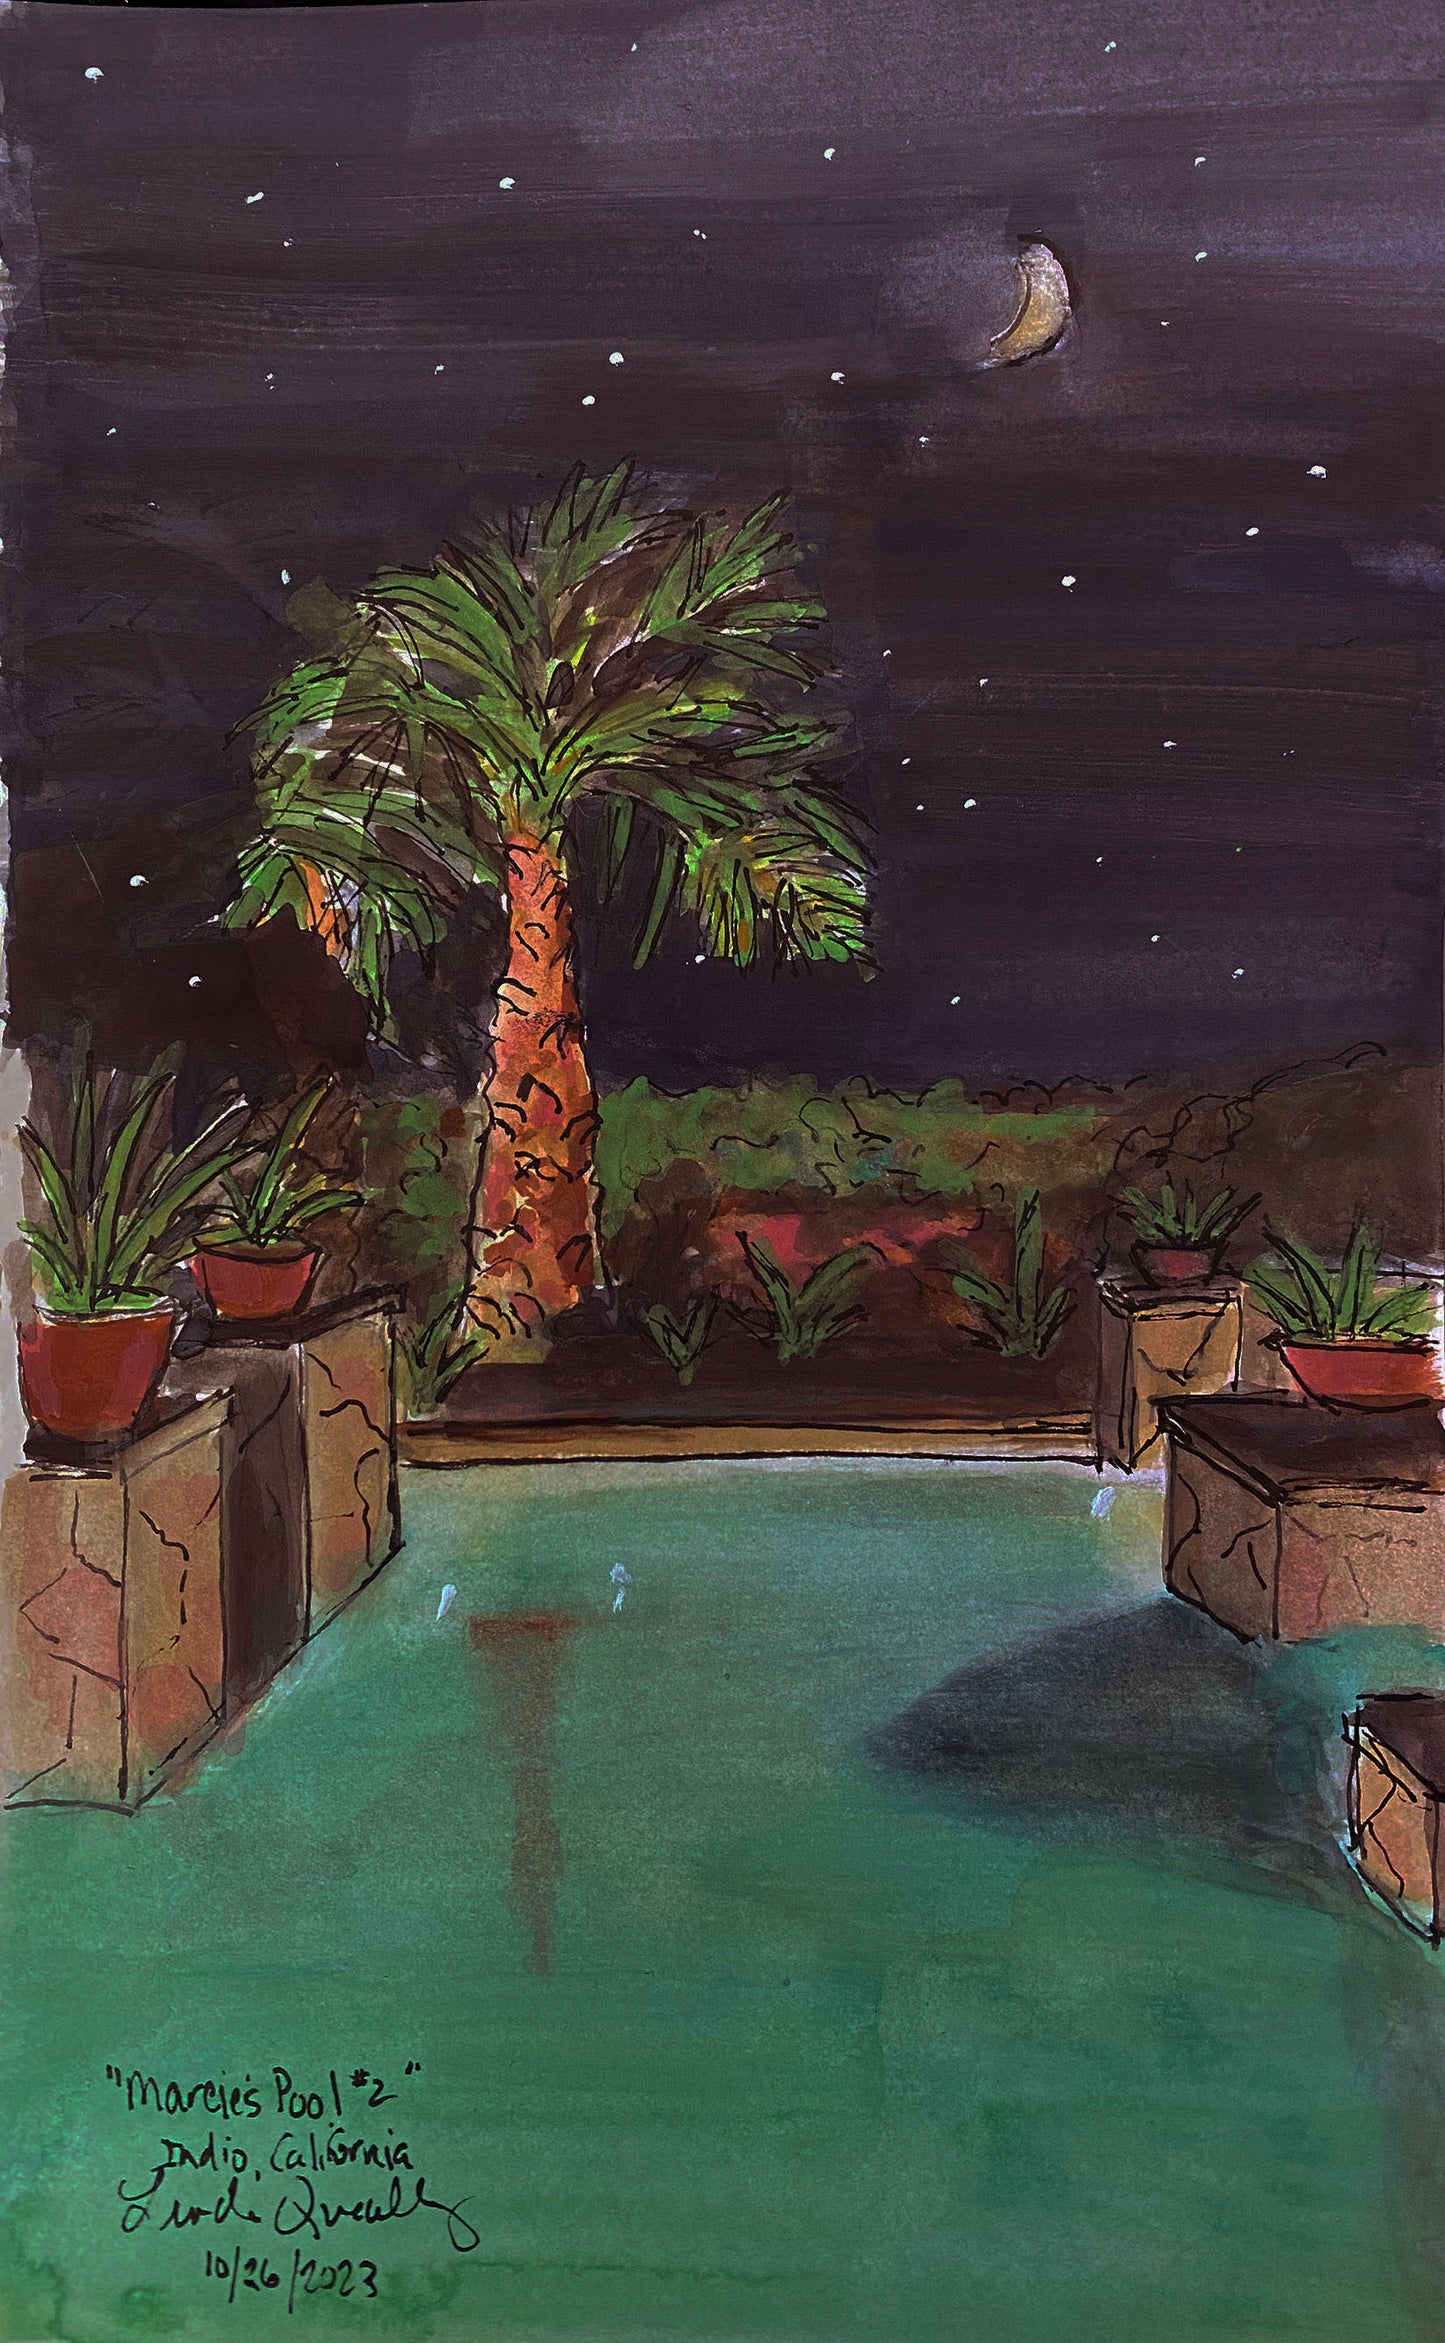 "Marcie's Pool #2", Indio, California Sketch